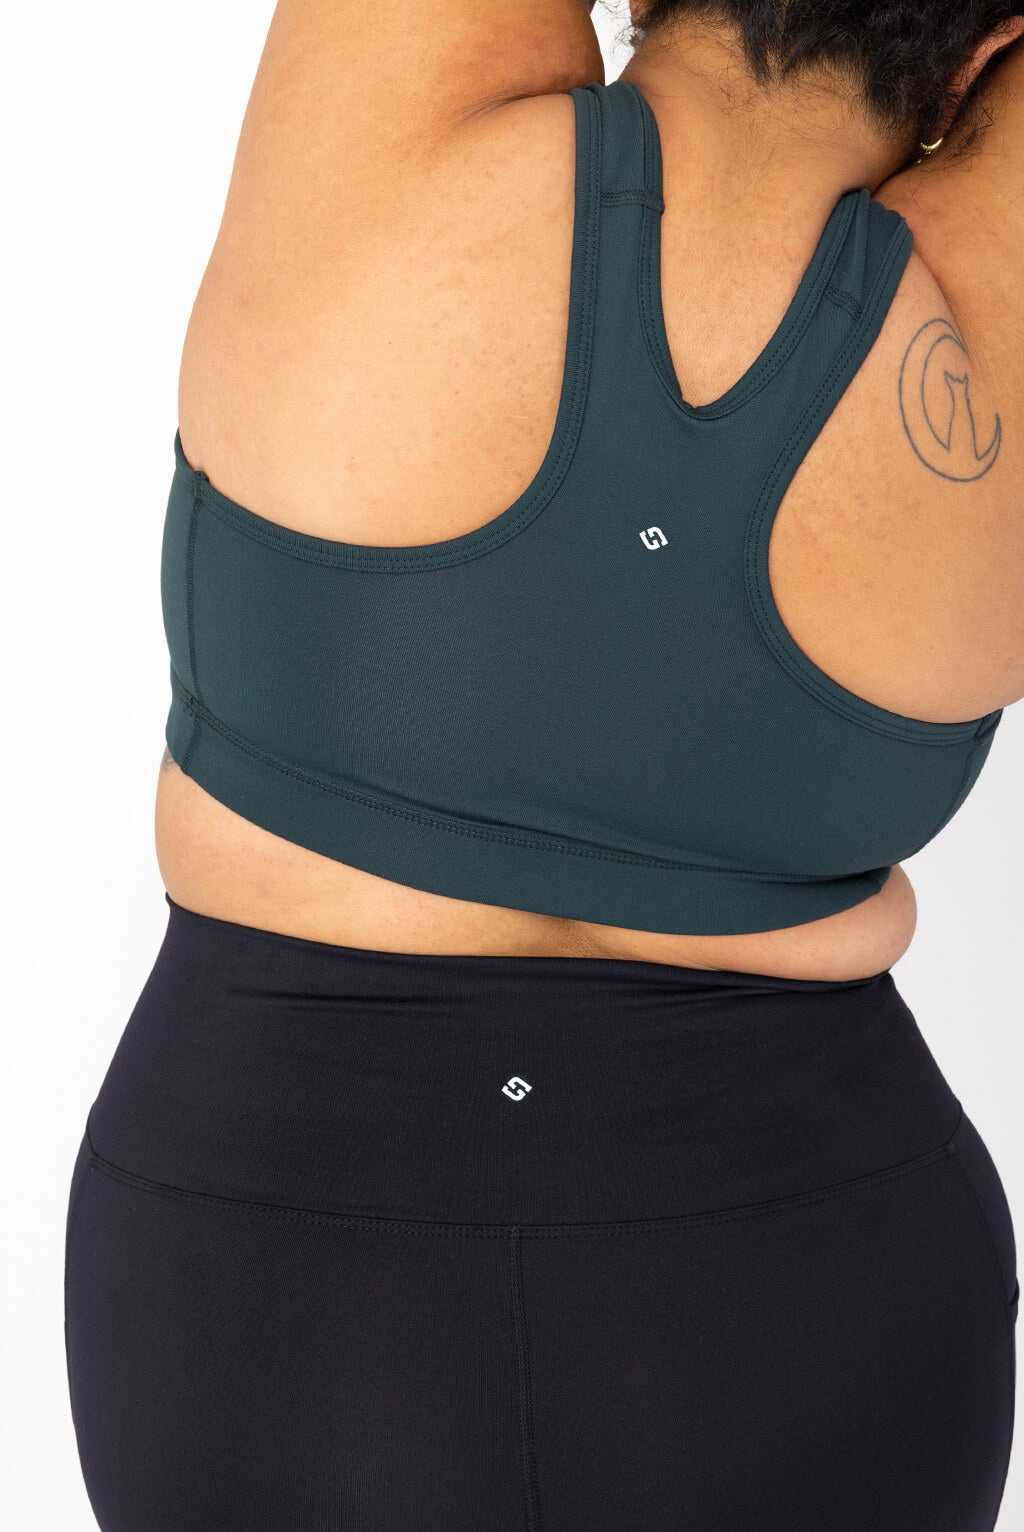 plus size compression sports bra in evergreen, back